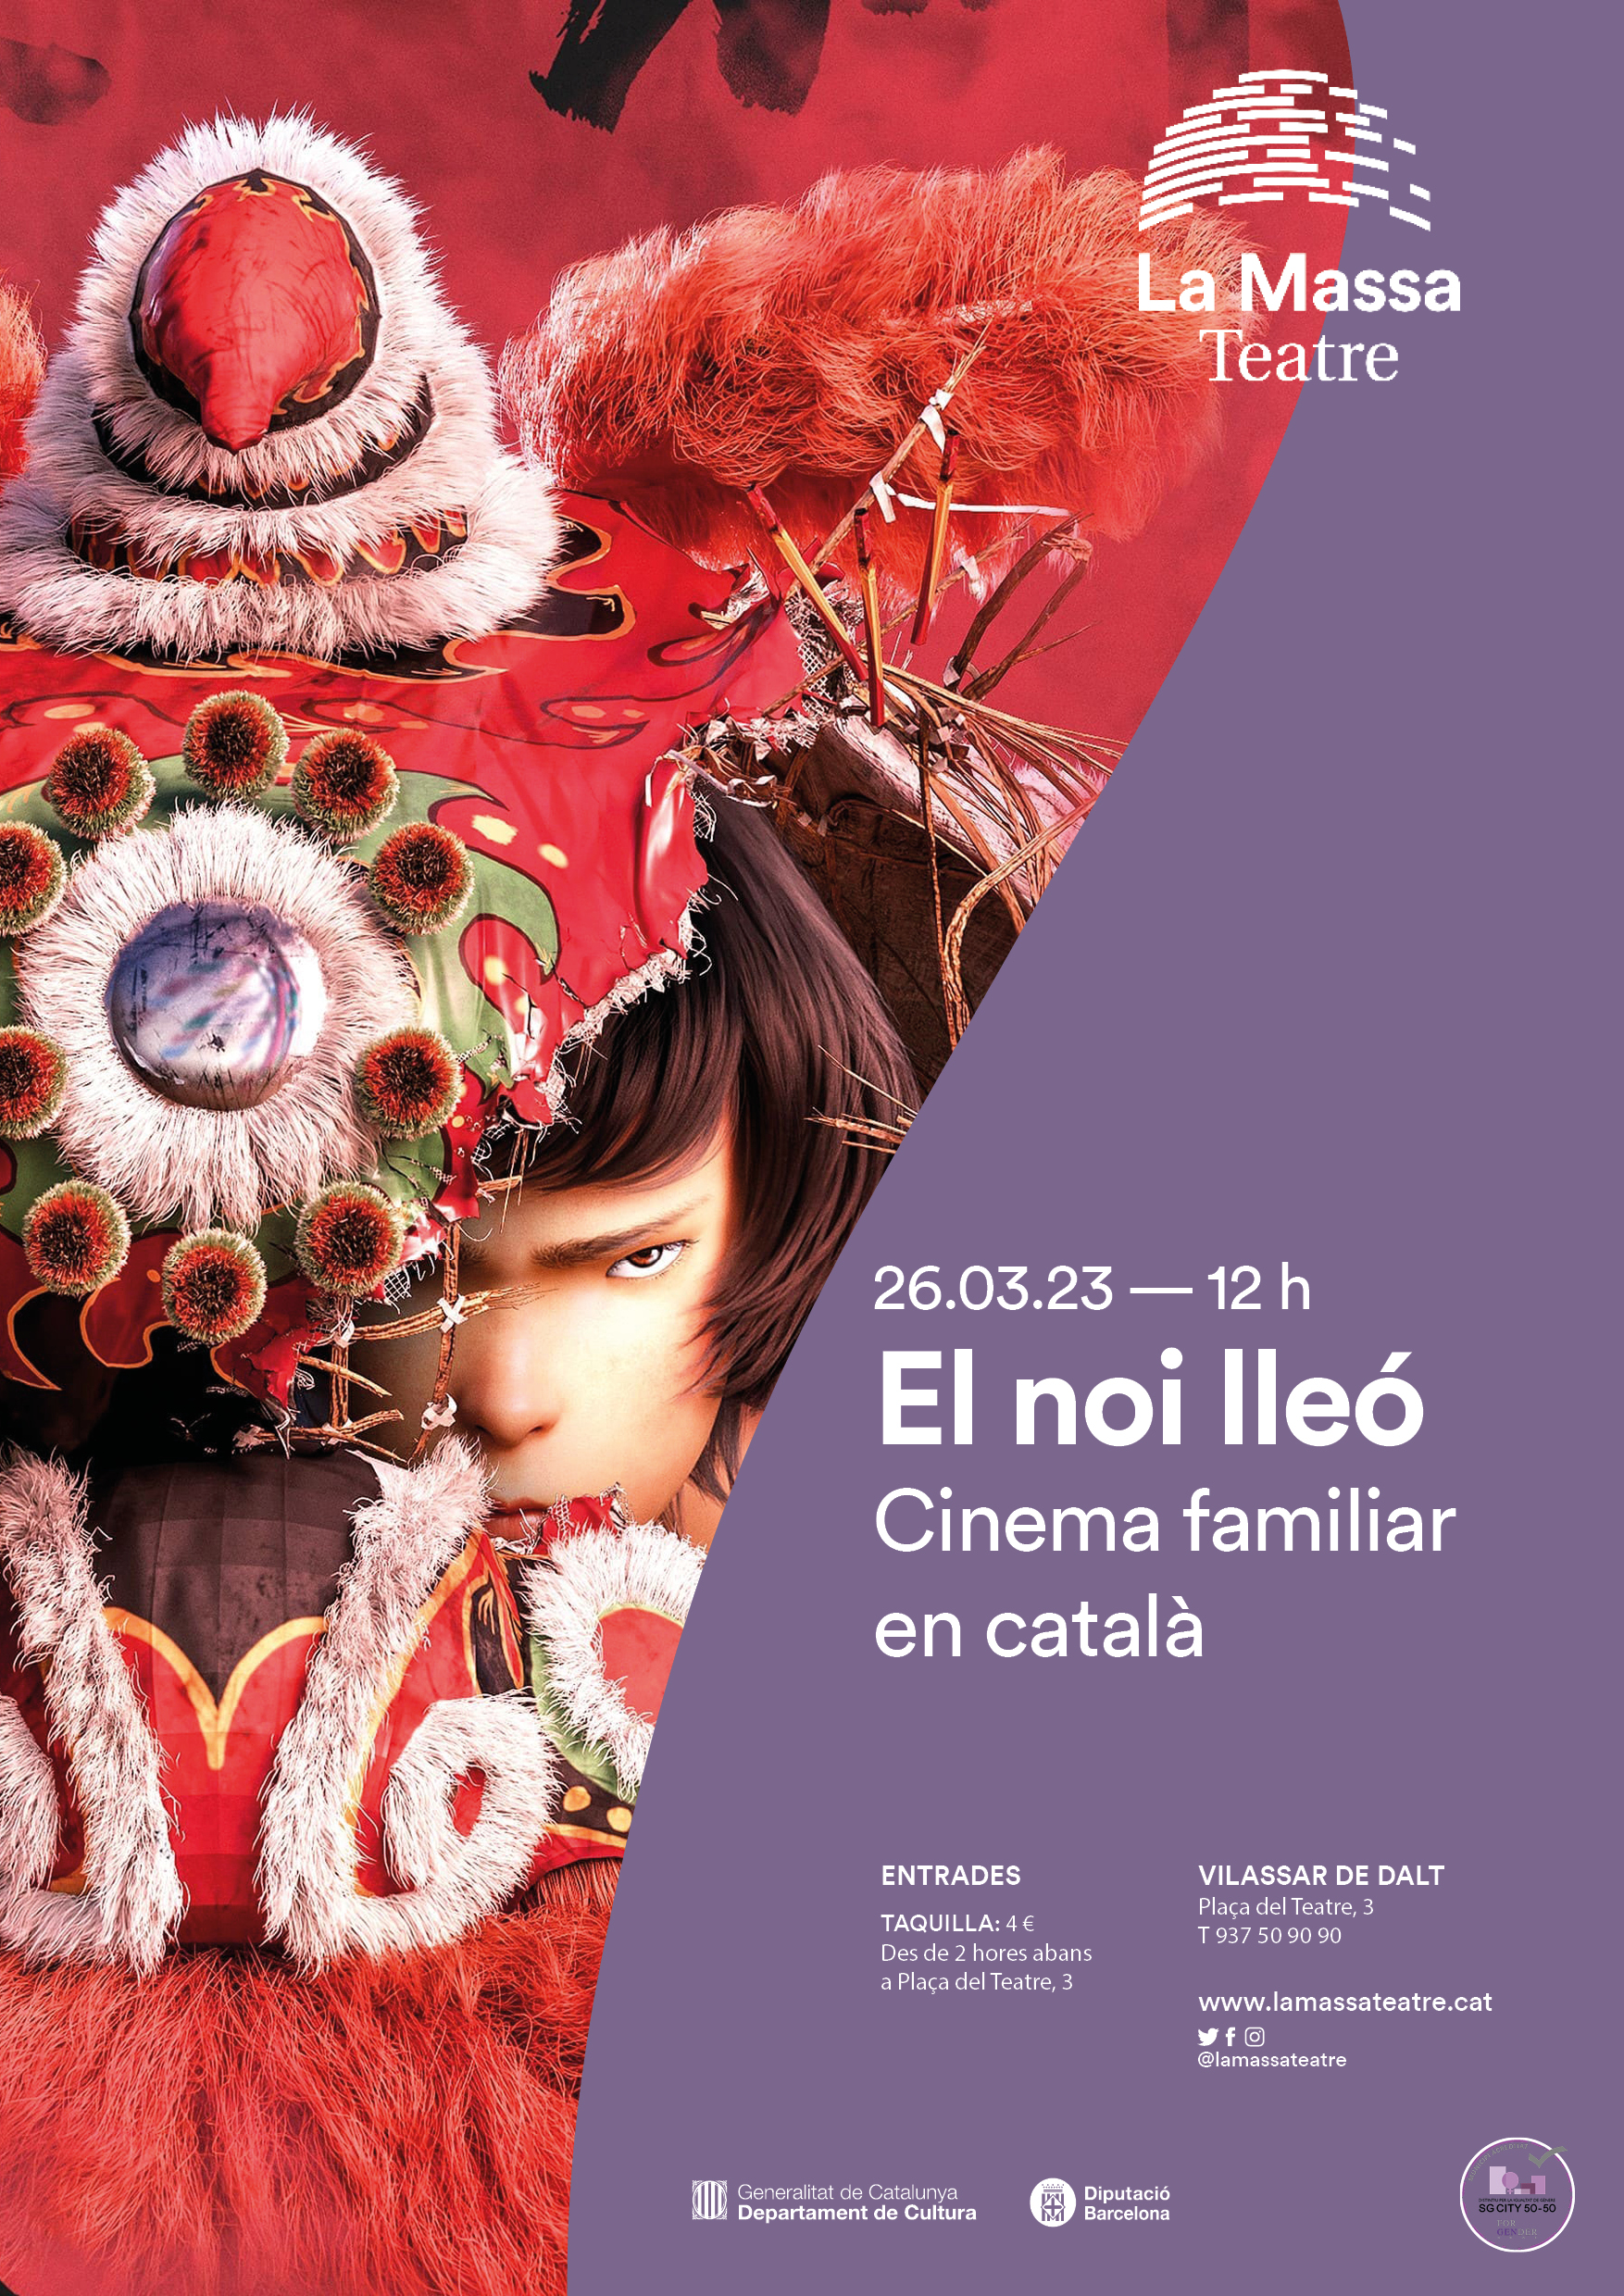 Cinema familiar en català: El noi lleó